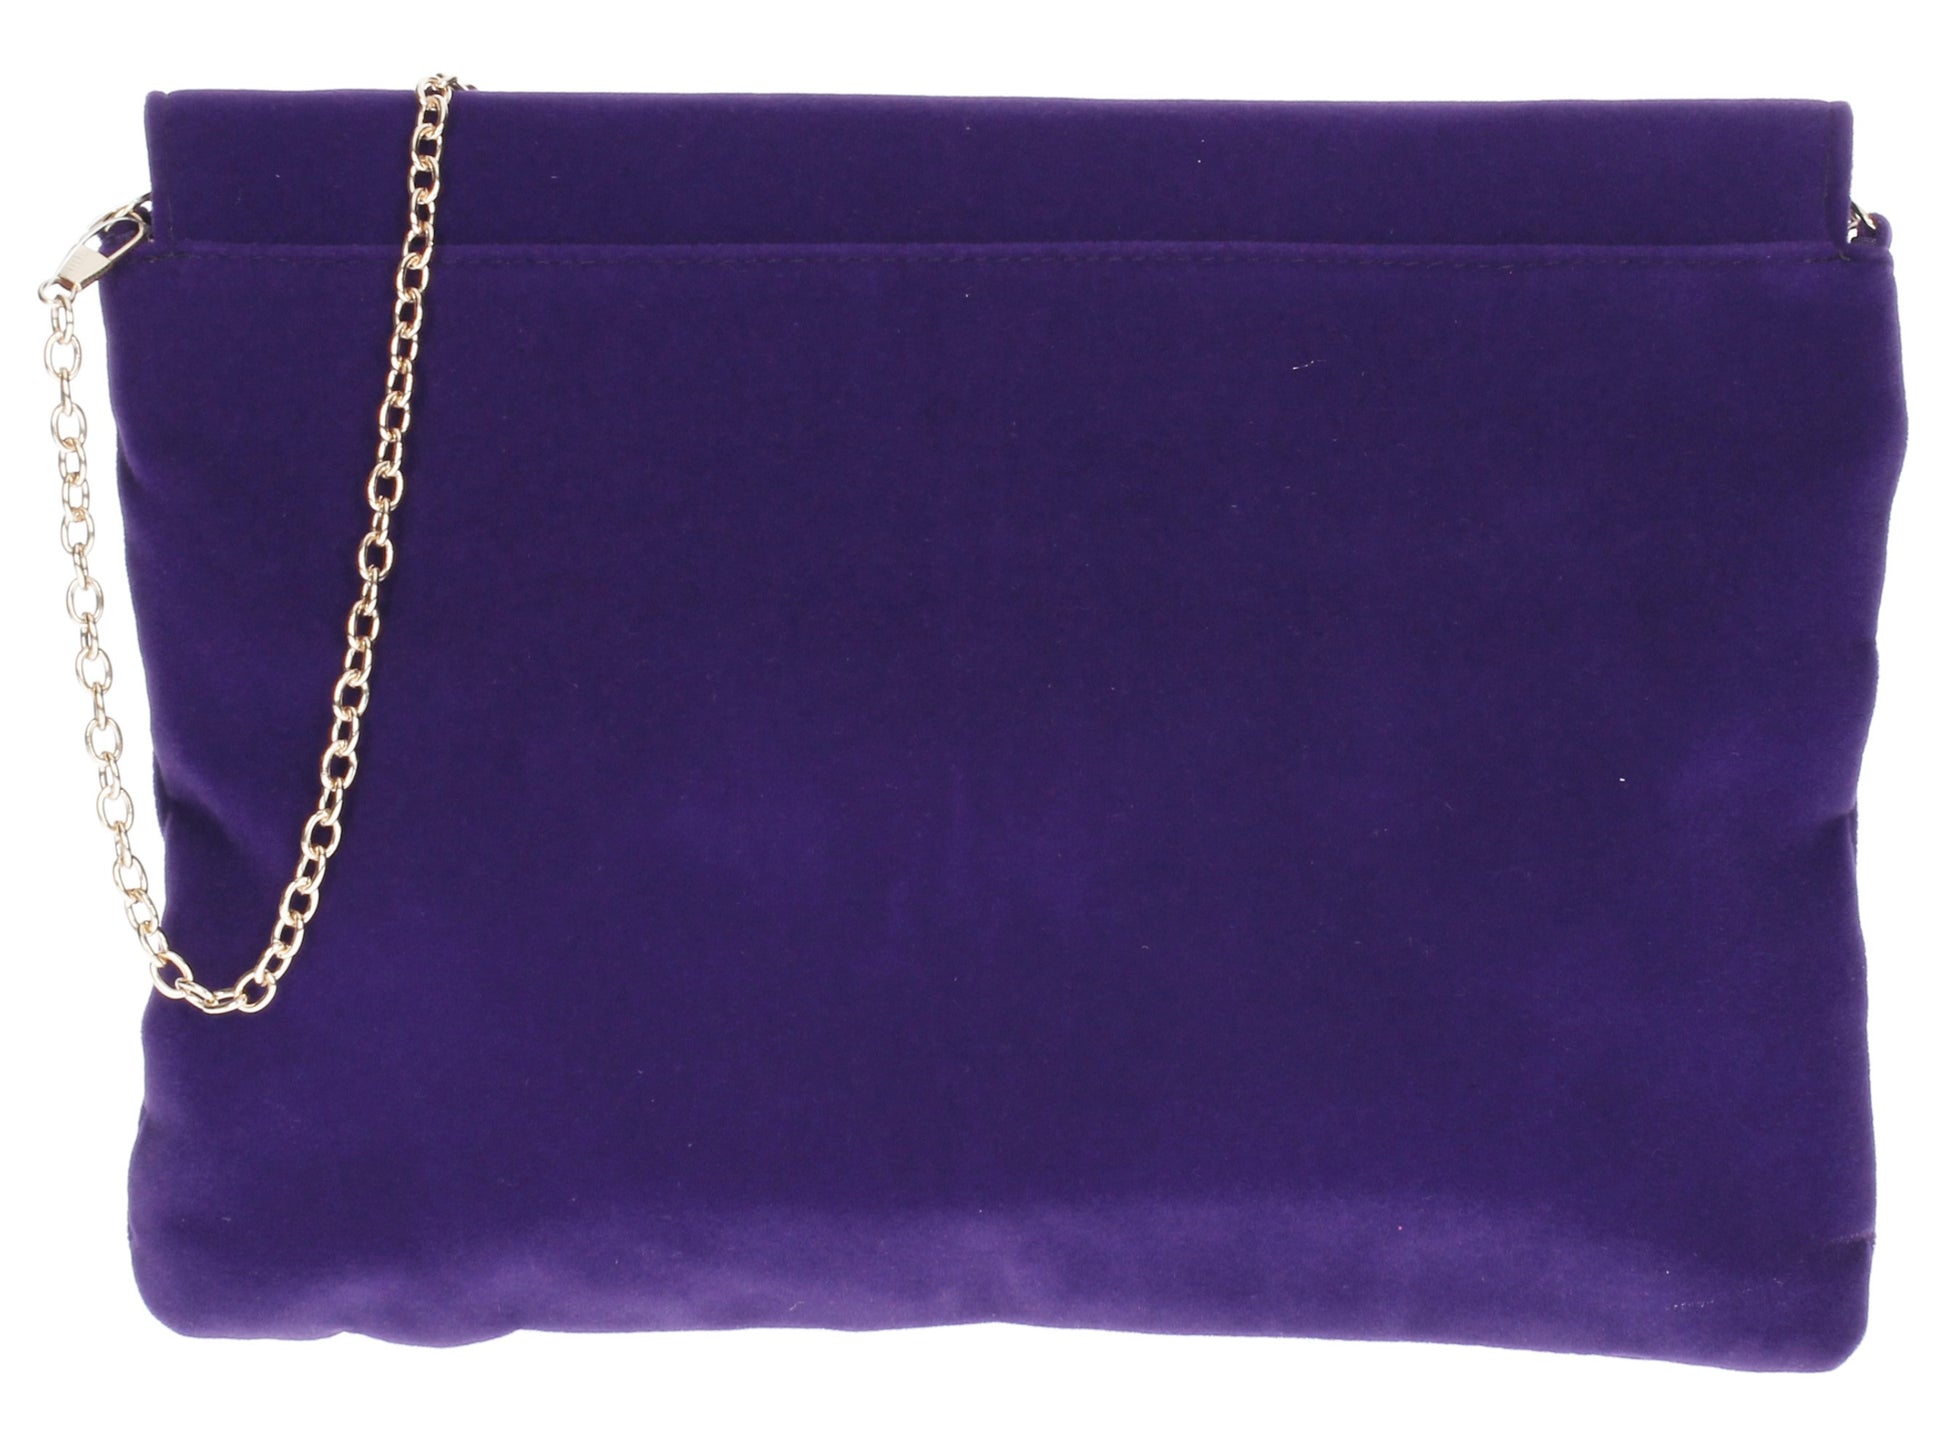 SWANKYSWANS Rita Clutch Bag Purple Cute Cheap Clutch Bag For Weddings School and Work